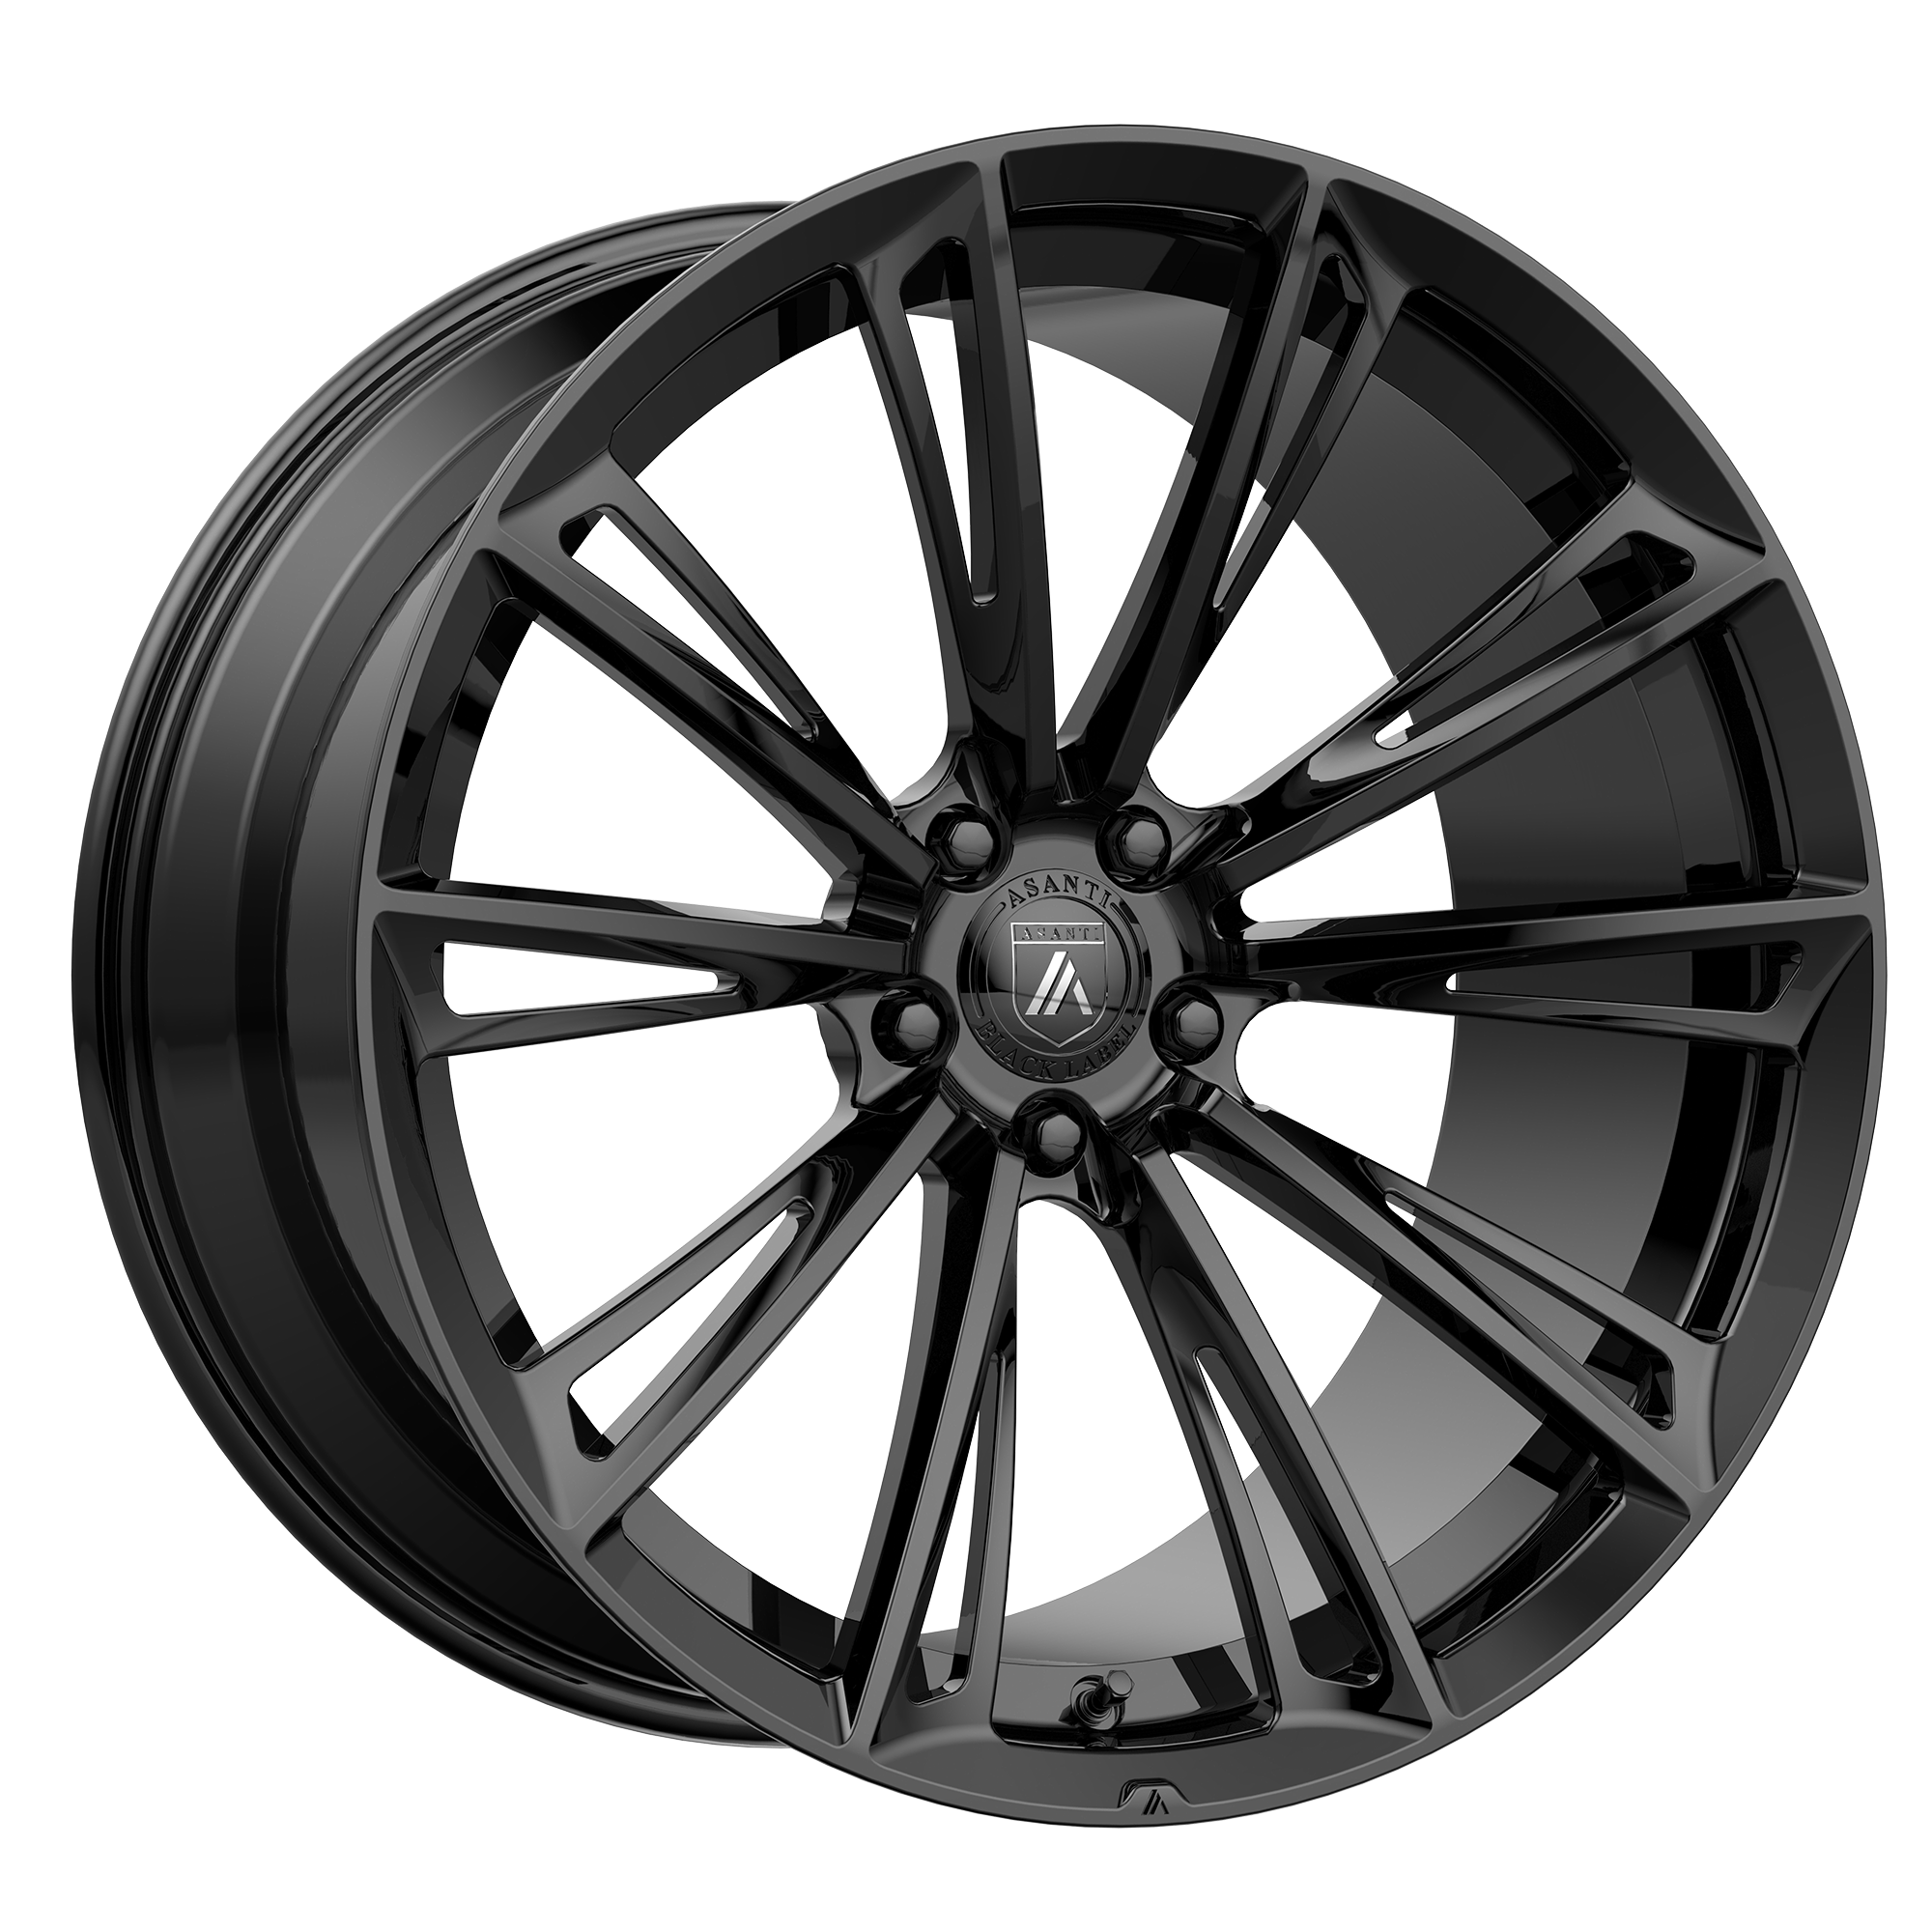 CORONA 20x10.5 5x120.00 GLOSS BLACK (38 mm) - Tires and Engine Performance